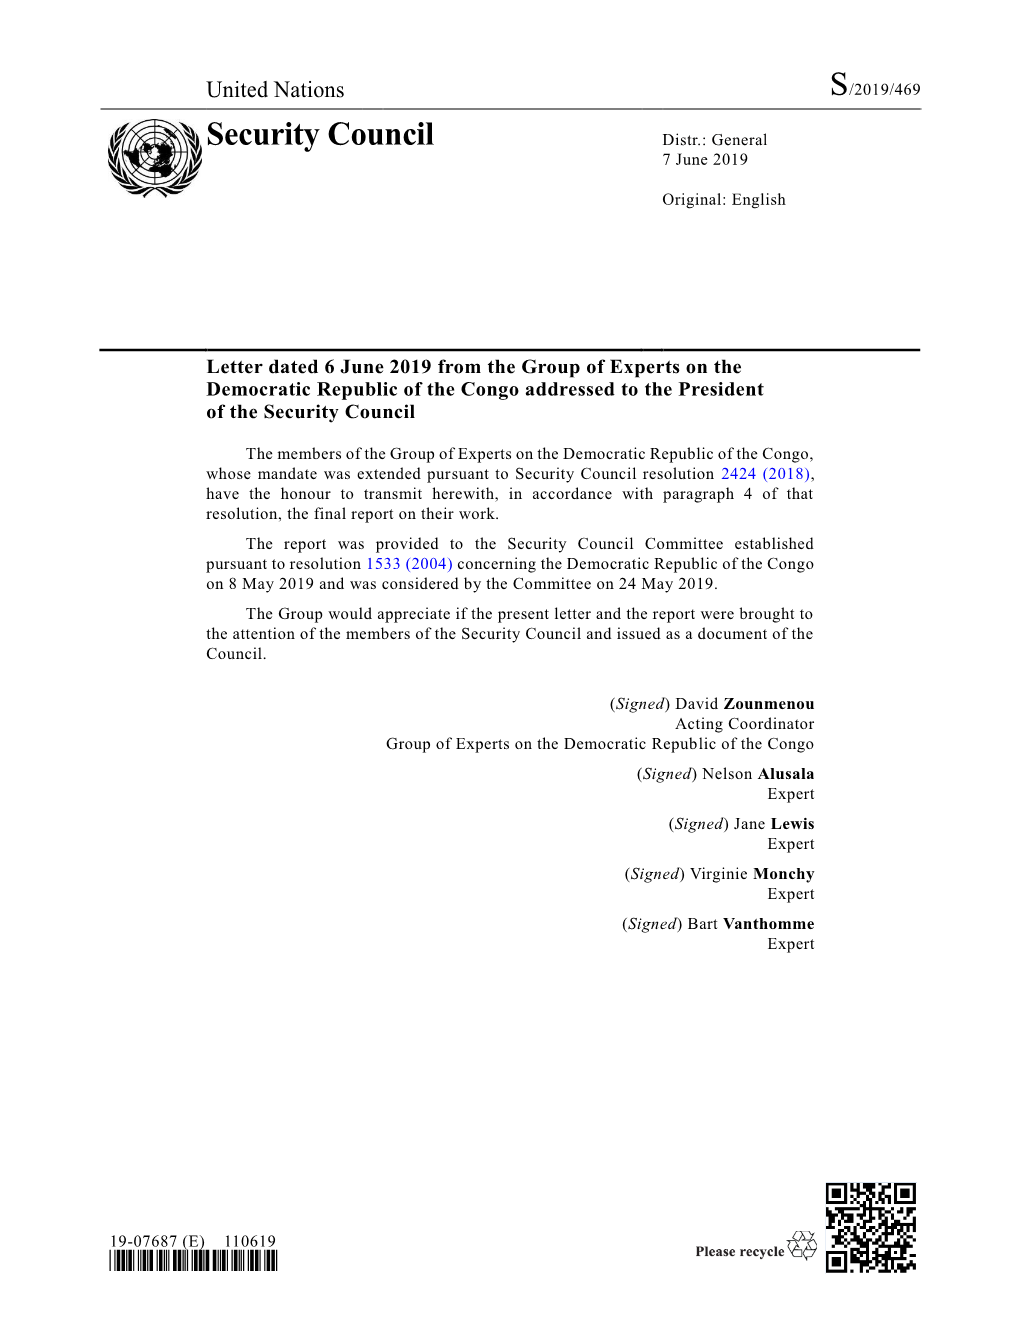 Security Council Distr.: General 7 June 2019